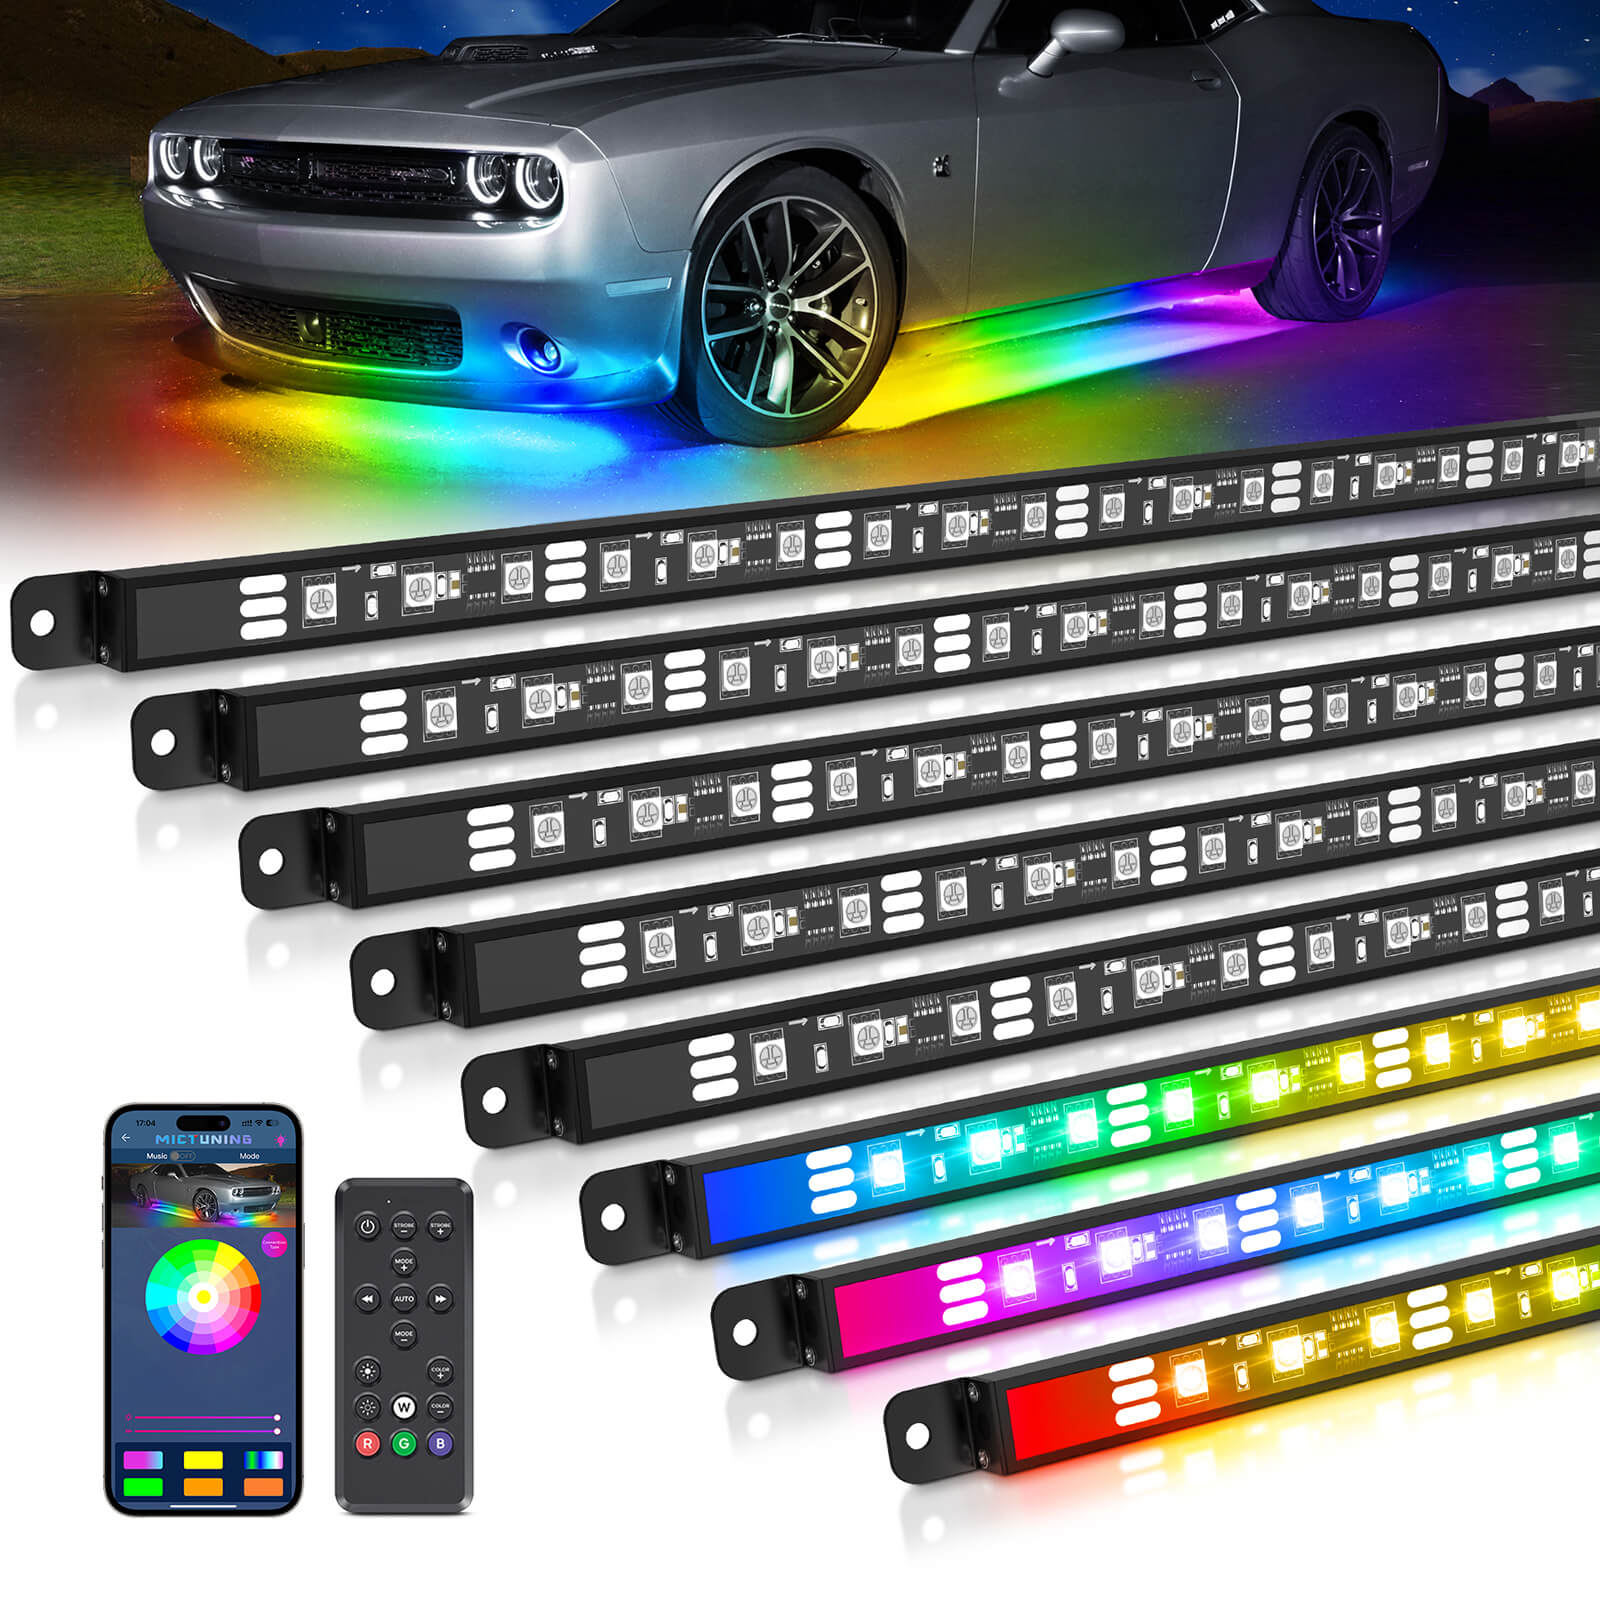 N8 Aluminum LED Car Underglow Light Kit, Exterior Underbody Multicolor Light Strip 8PCS（RGBW/RGB+IC）